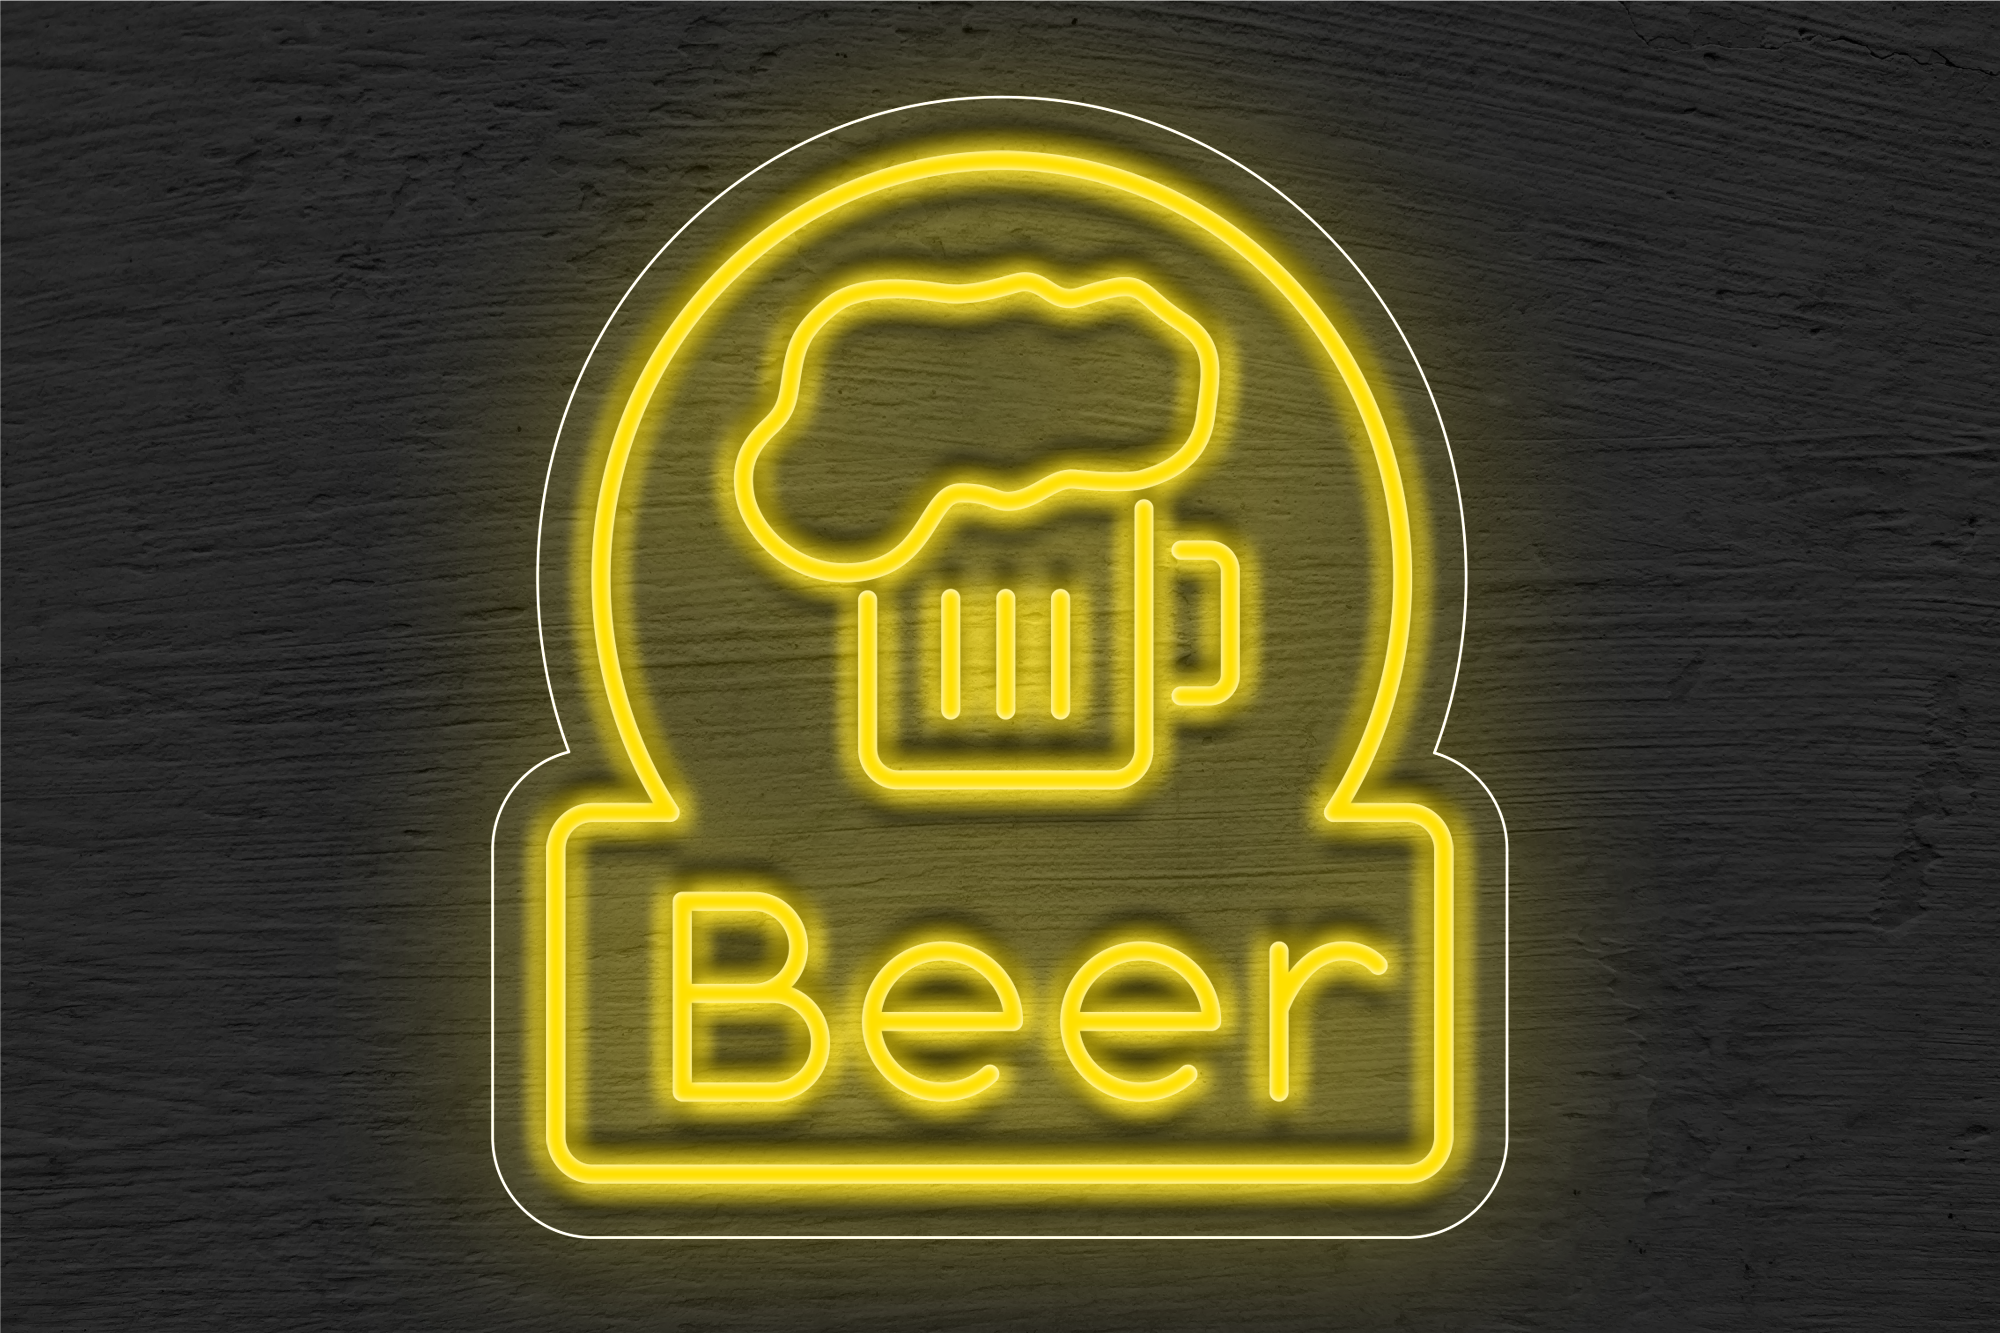 Mug and "Beer" with Border LED Neon Sign